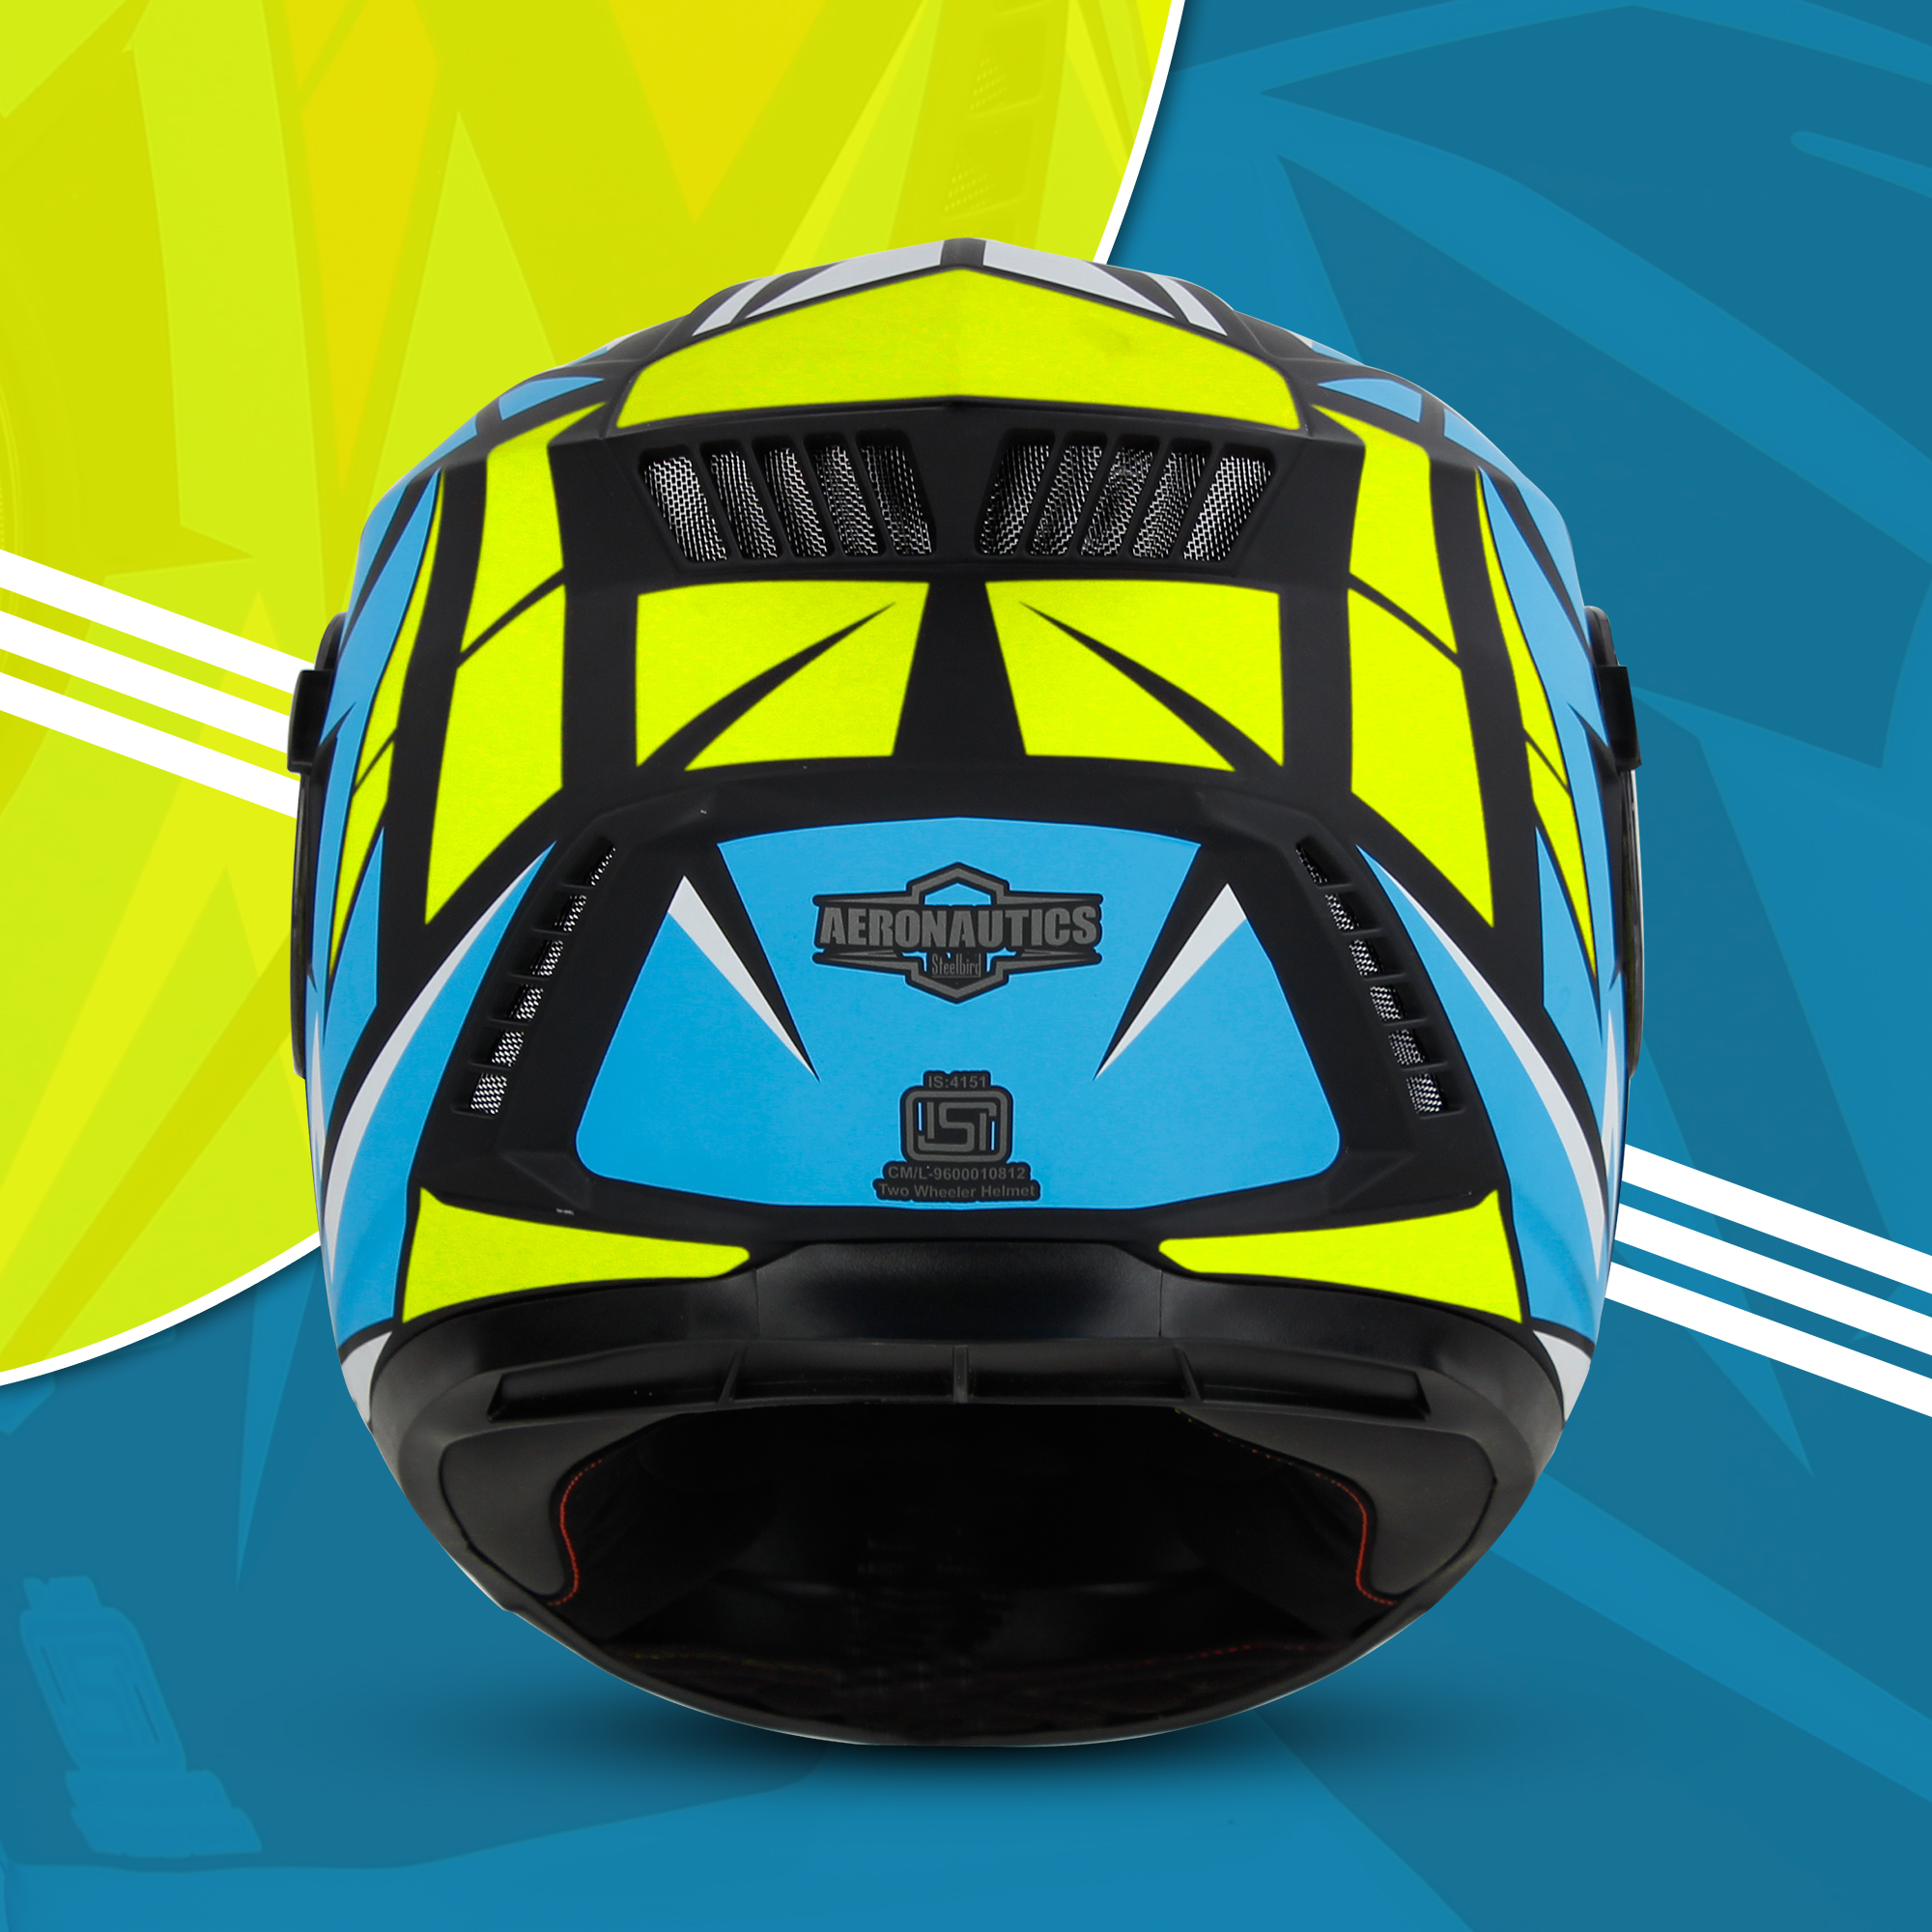 Steelbird SBH-40 Decode ISI Certified Full Face Graphic Helmet For Men And Women With Inner Sun Shield (Matt Black Neon)